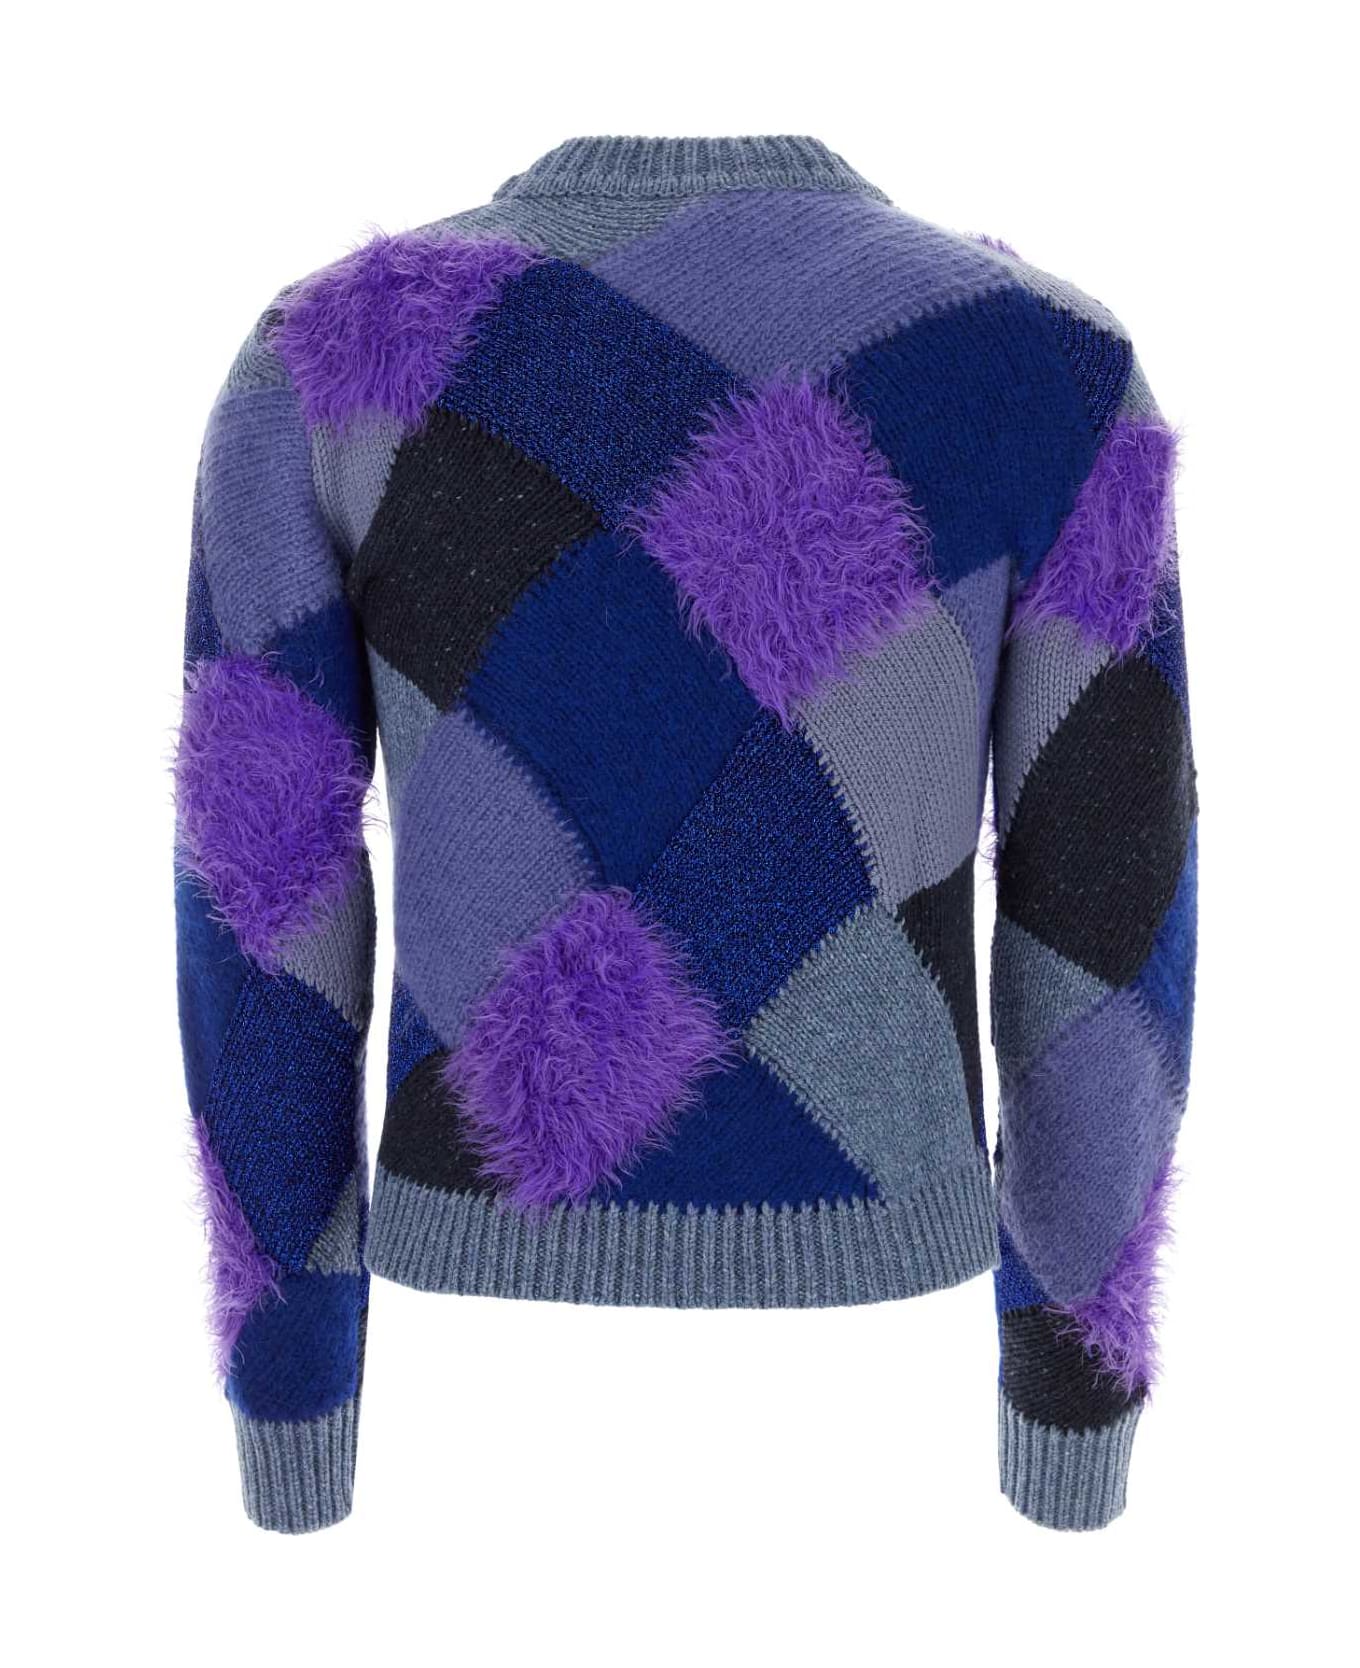 Marni Embroidered Wool Sweater - OCEAN